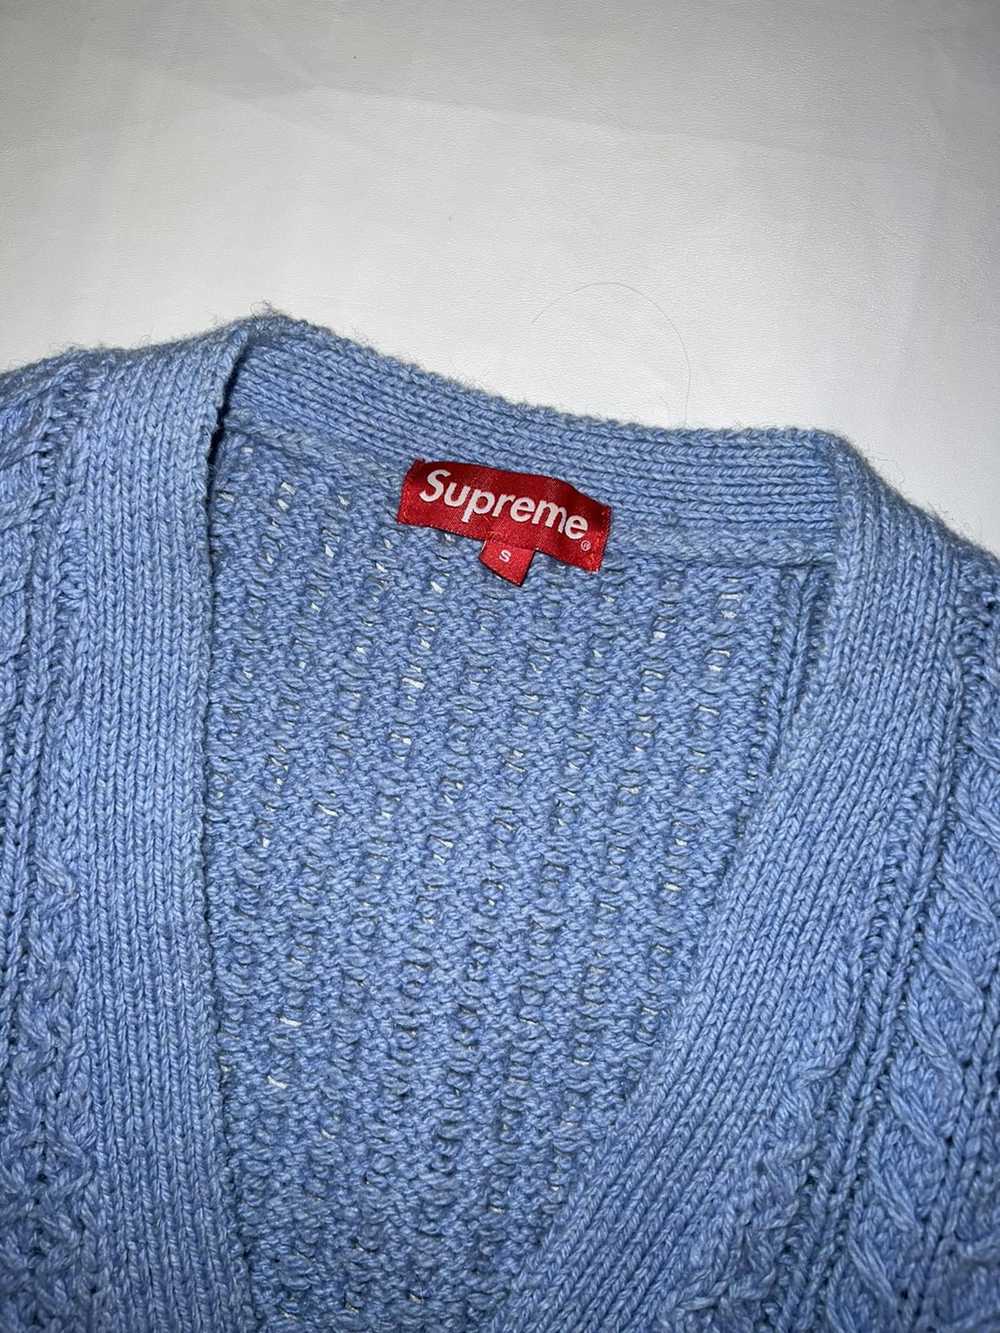 Supreme Supreme Cable Knit Cardigan - image 2